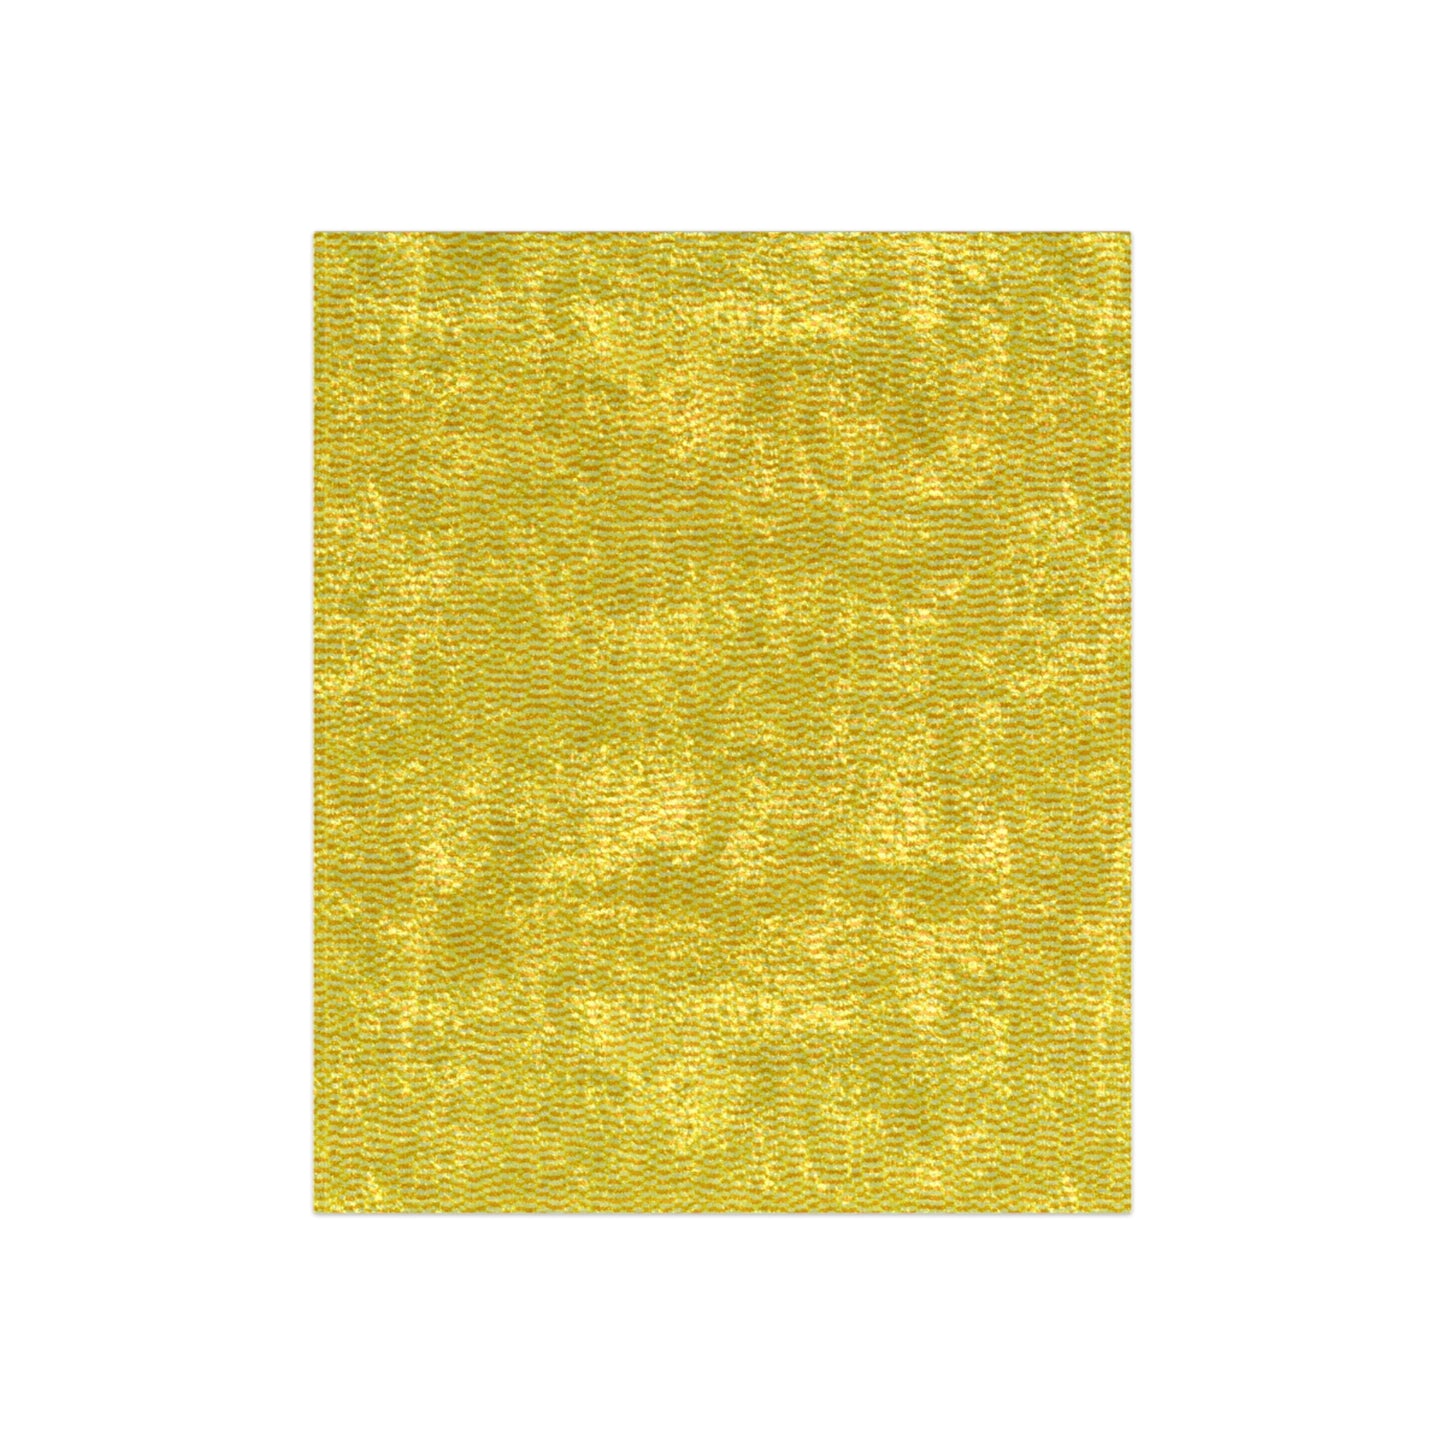 Sunshine Yellow Lemon: Denim-Inspired, Cheerful Fabric - Crushed Velvet Blanket